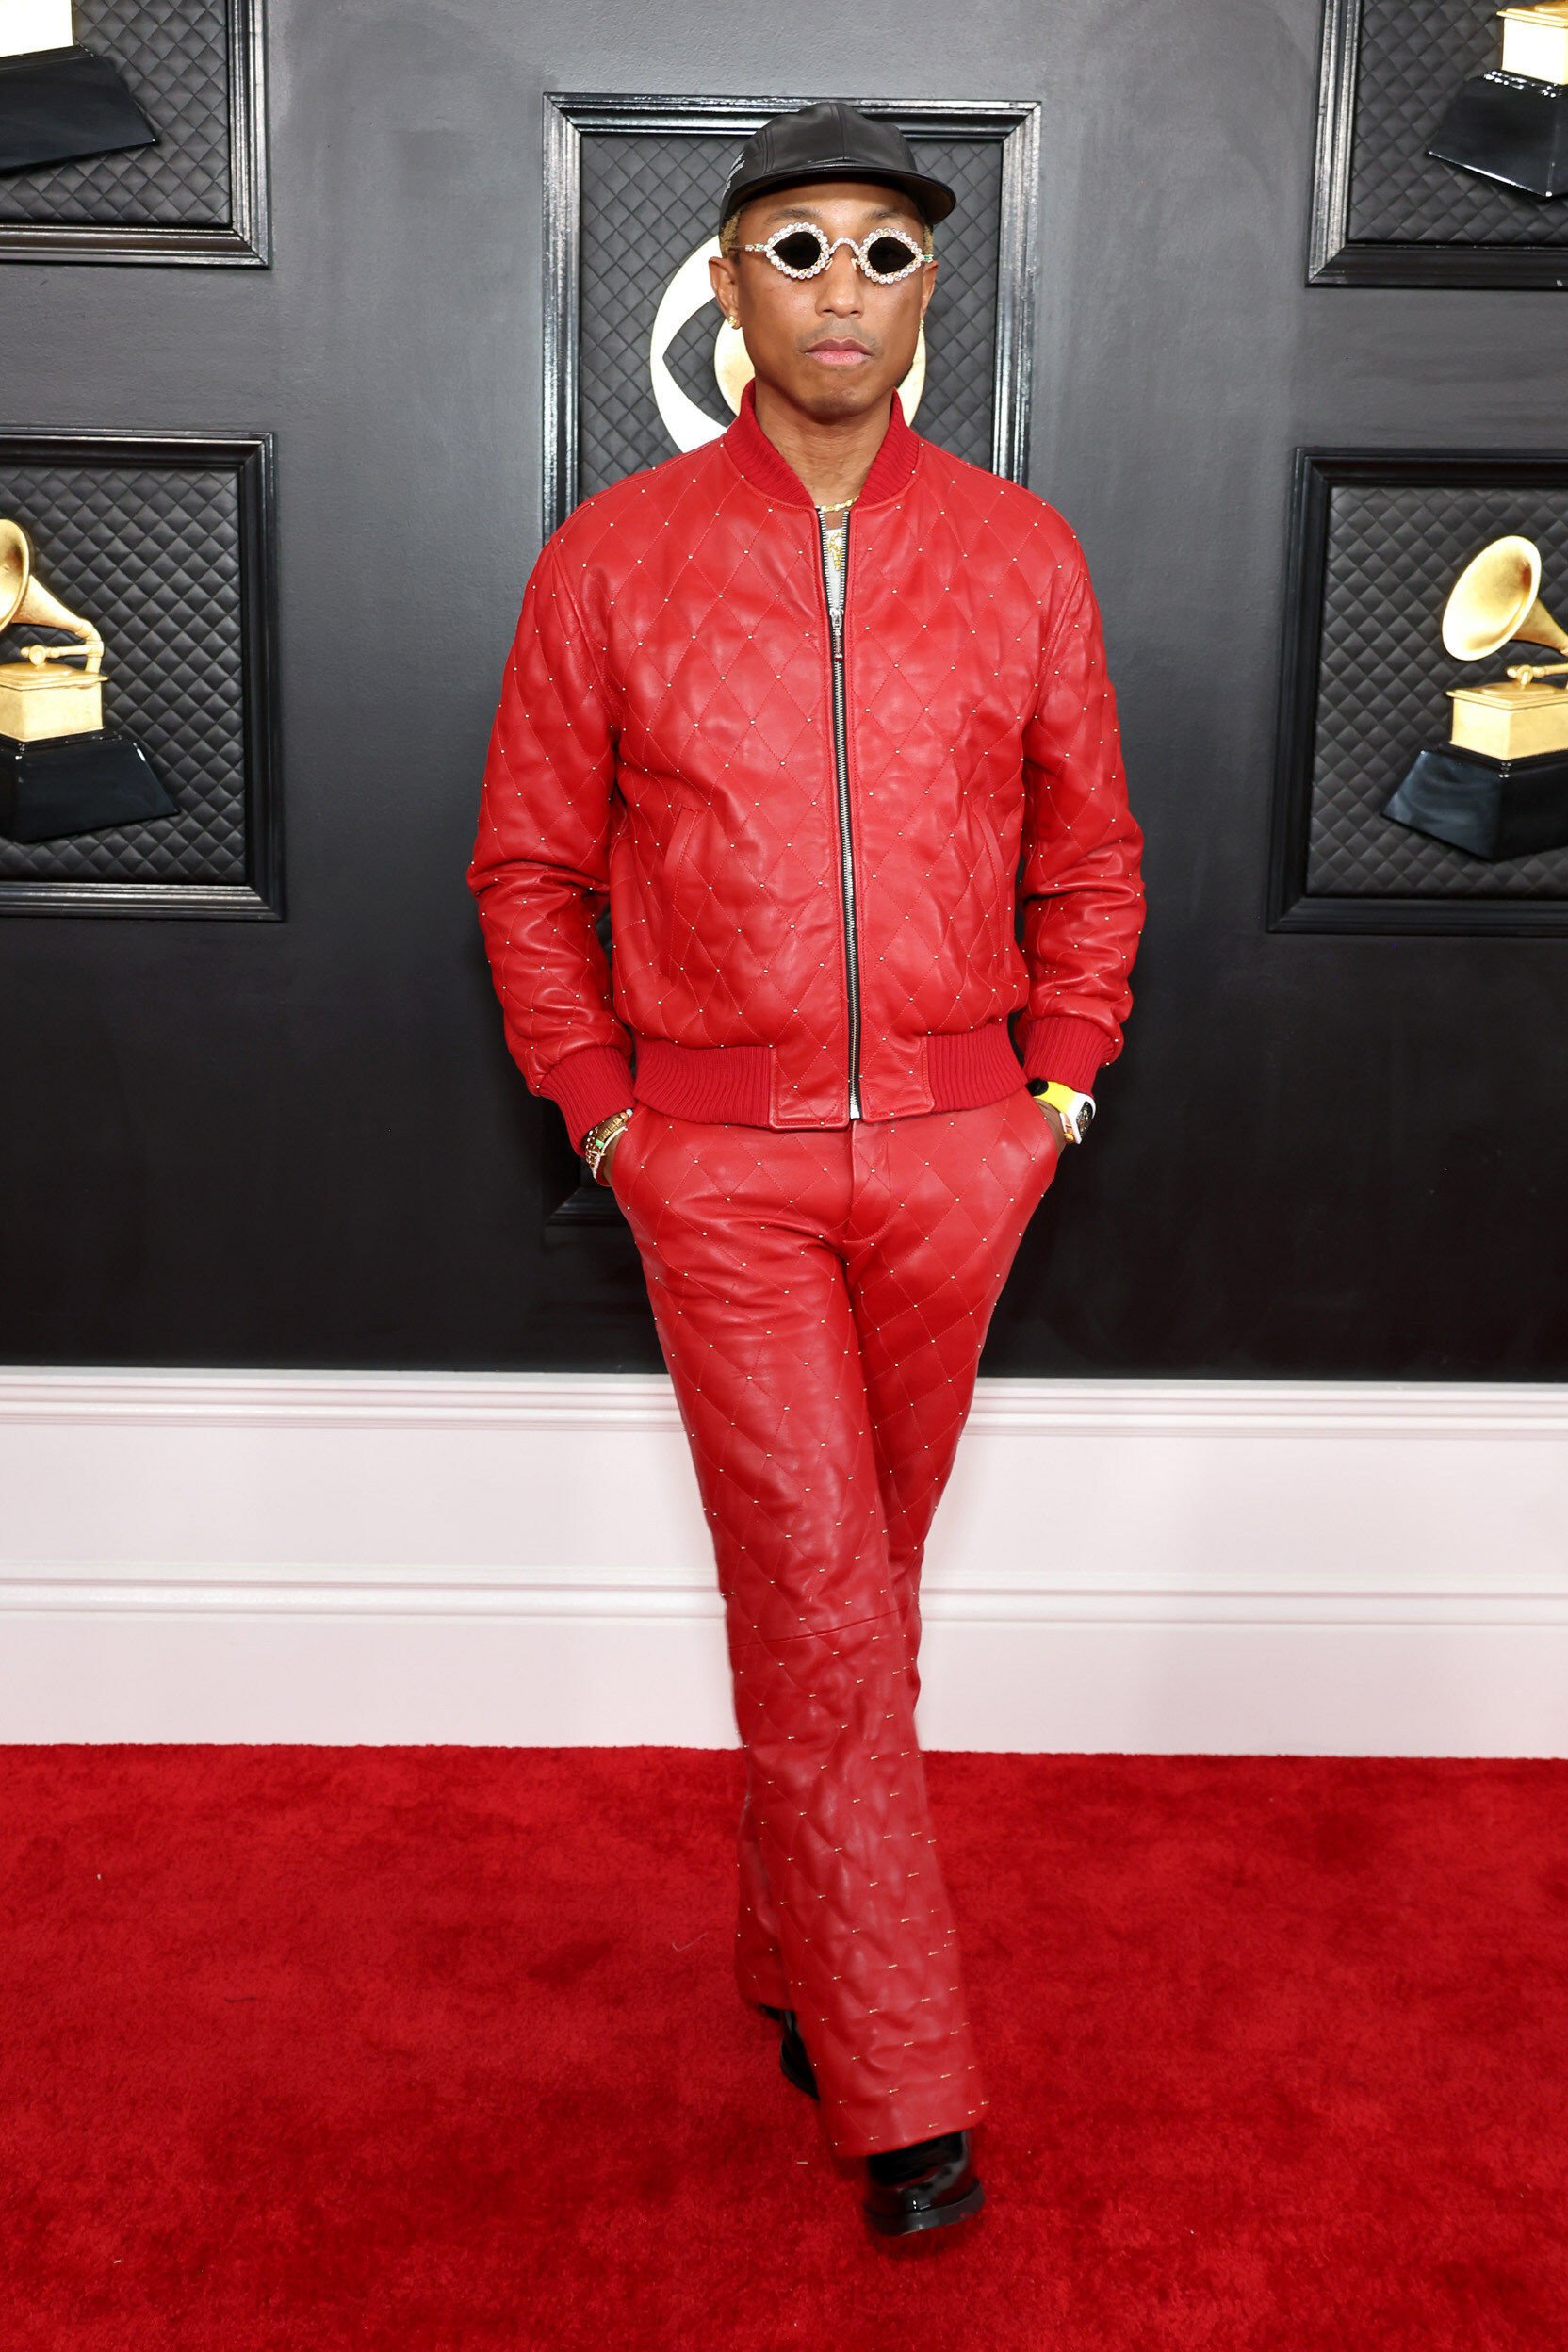 Singer, producer and Louis Vuitton creative director Pharrell Williams. Photo: Handout